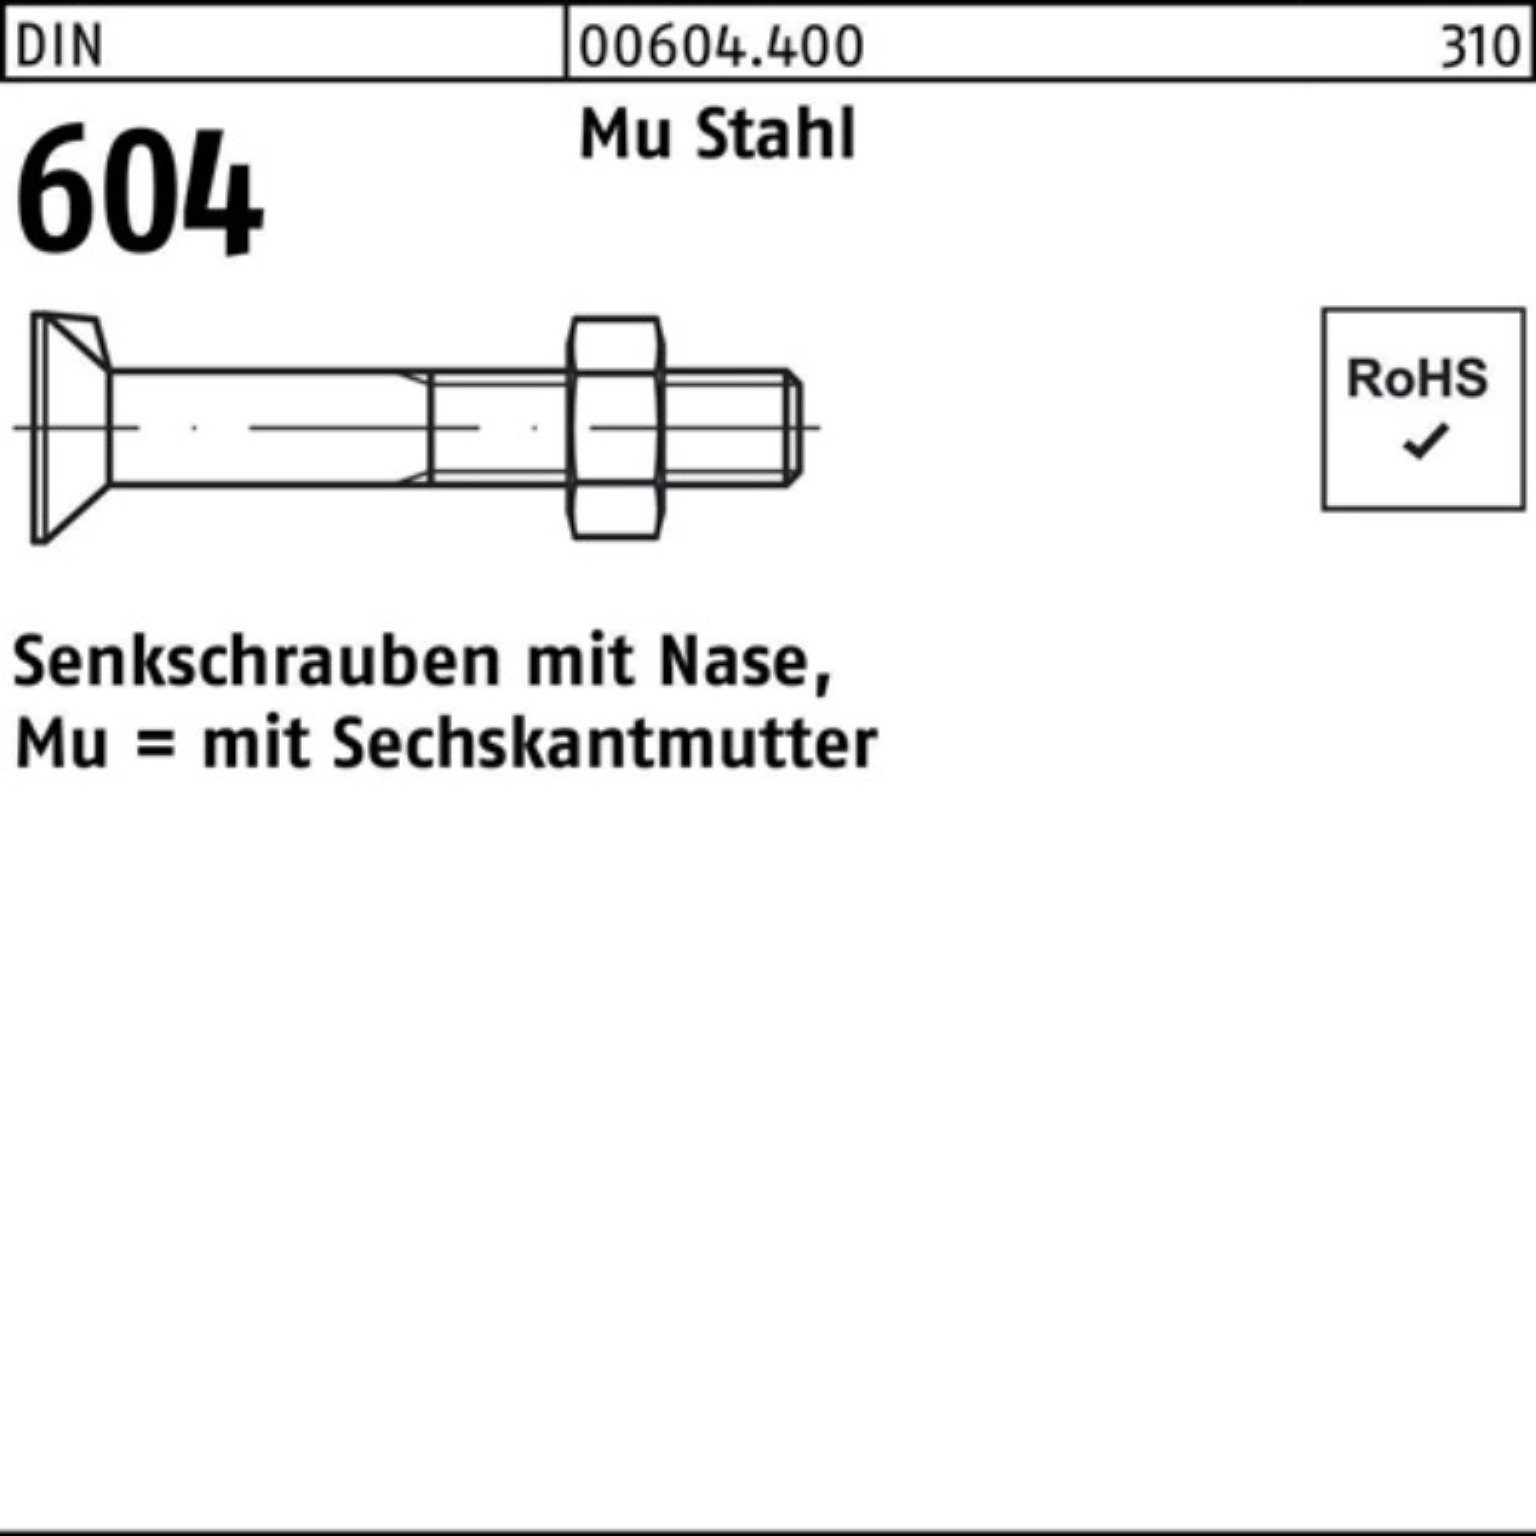 preisvergleichsanalysen Reyher Senkschraube 100er DIN Nase/6-ktmutter 604 Mu 4.6 Senkschraube Pack 110 M16x Stahl